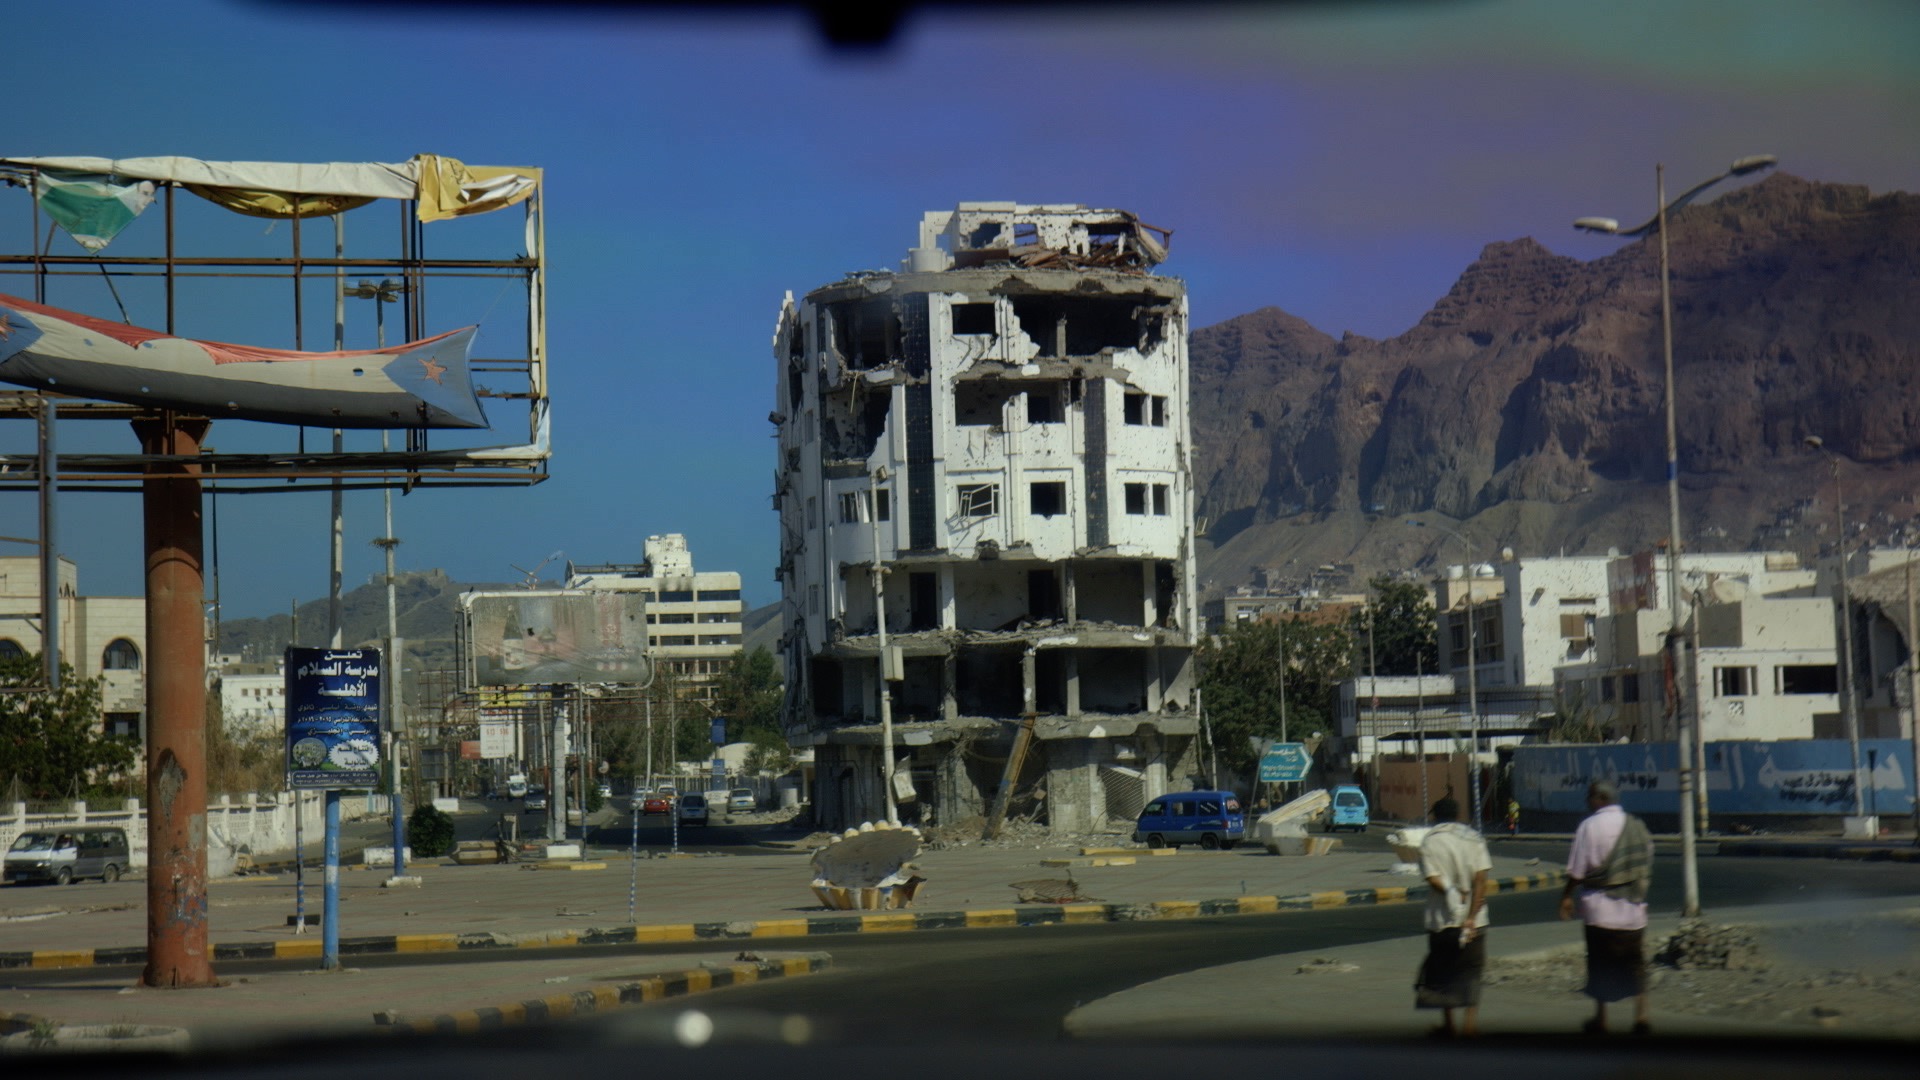 Aden, Yemen, once a pristine port town, now ravaged by terrorism.